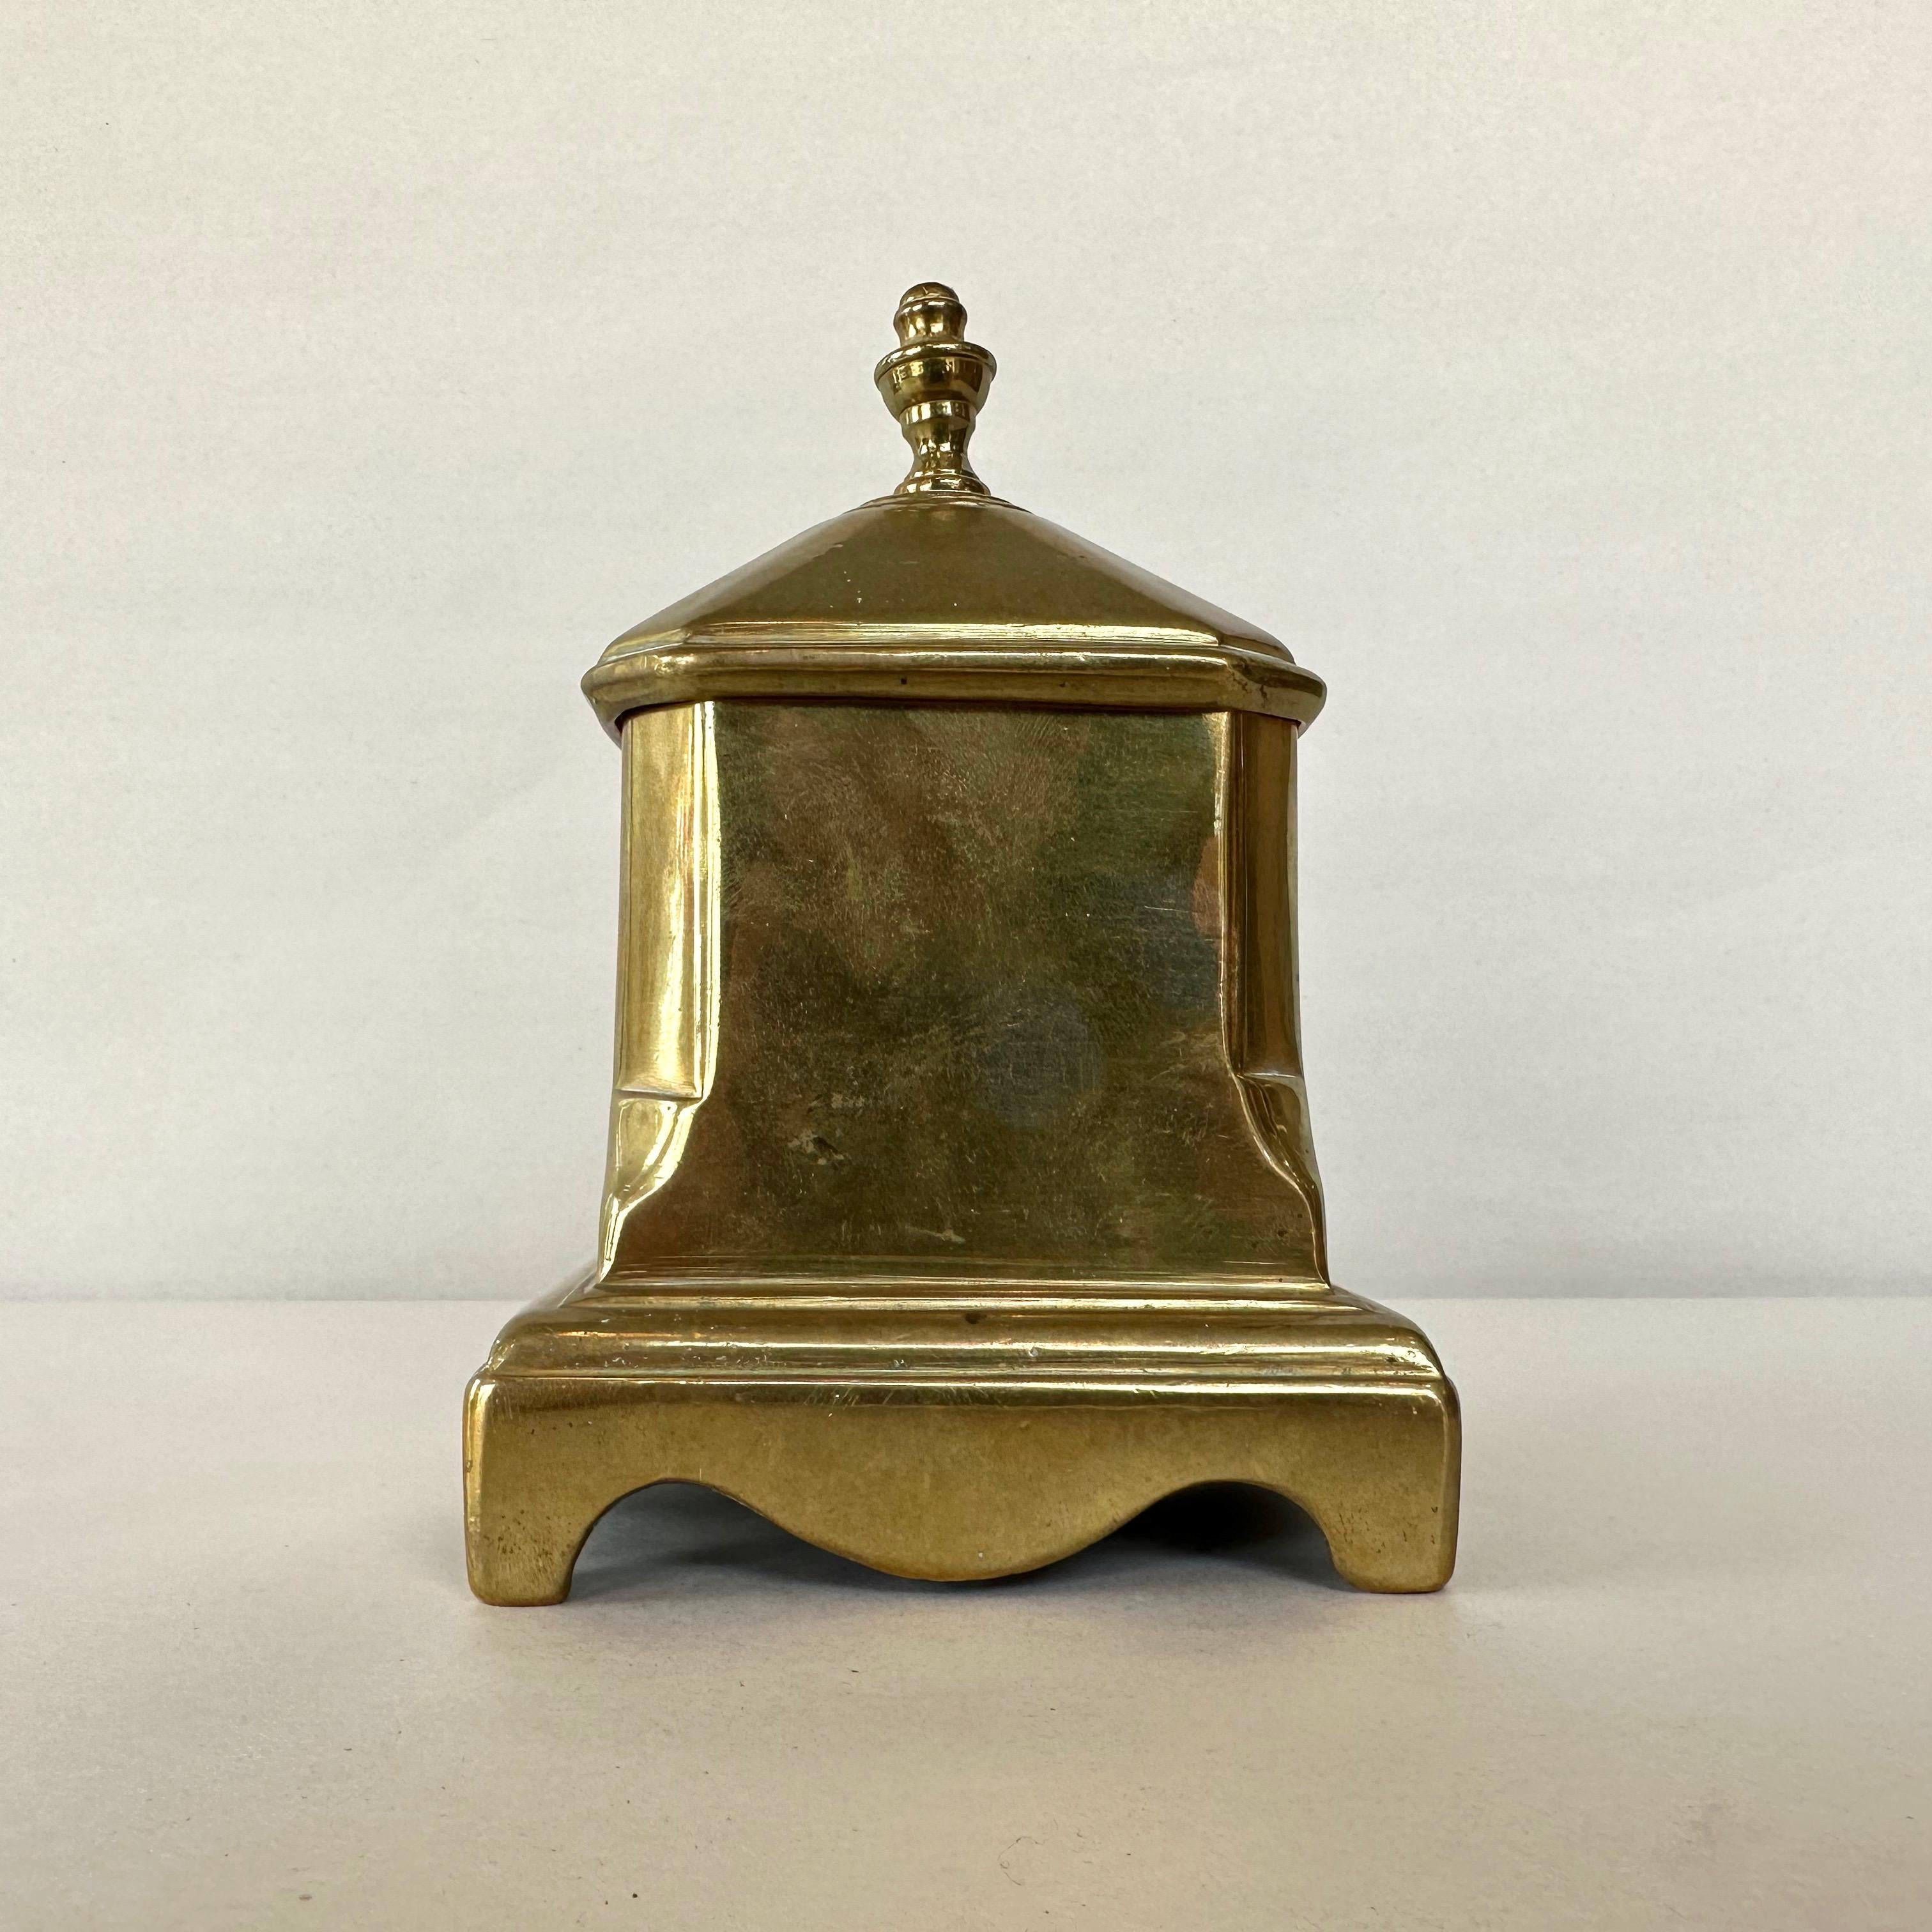 Antique American Queen Anne Period Lidded Brass Tobacco Box, circa 1750 For Sale 2